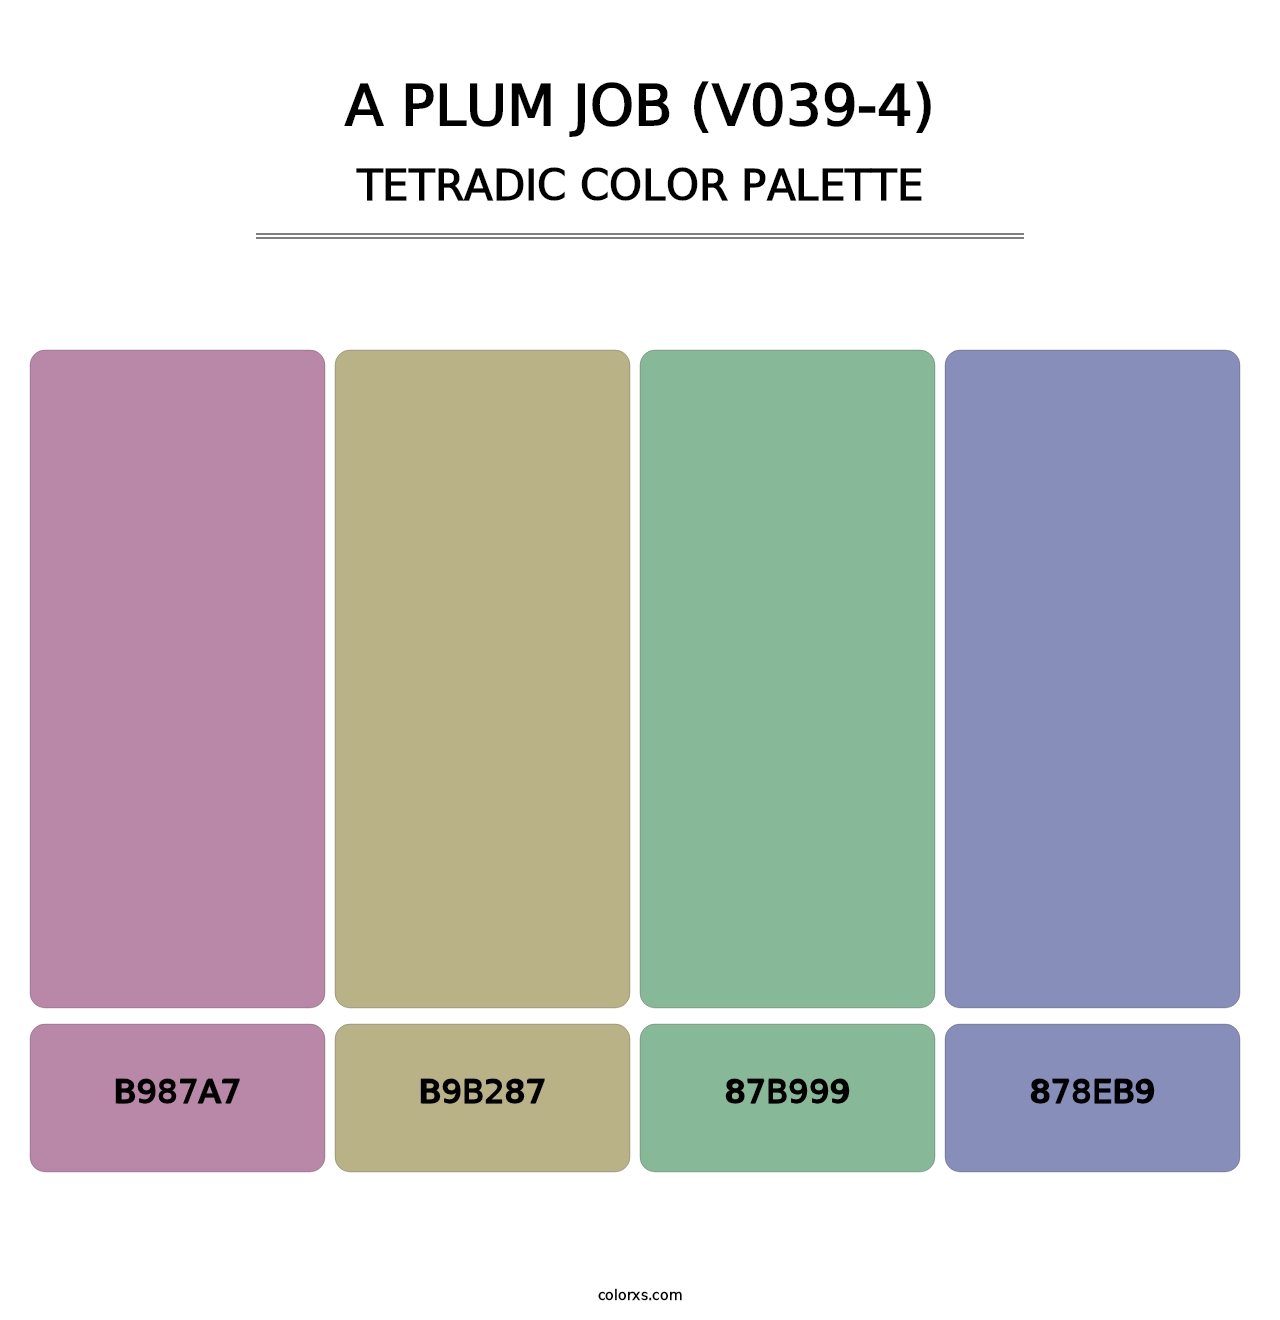 A Plum Job (V039-4) - Tetradic Color Palette